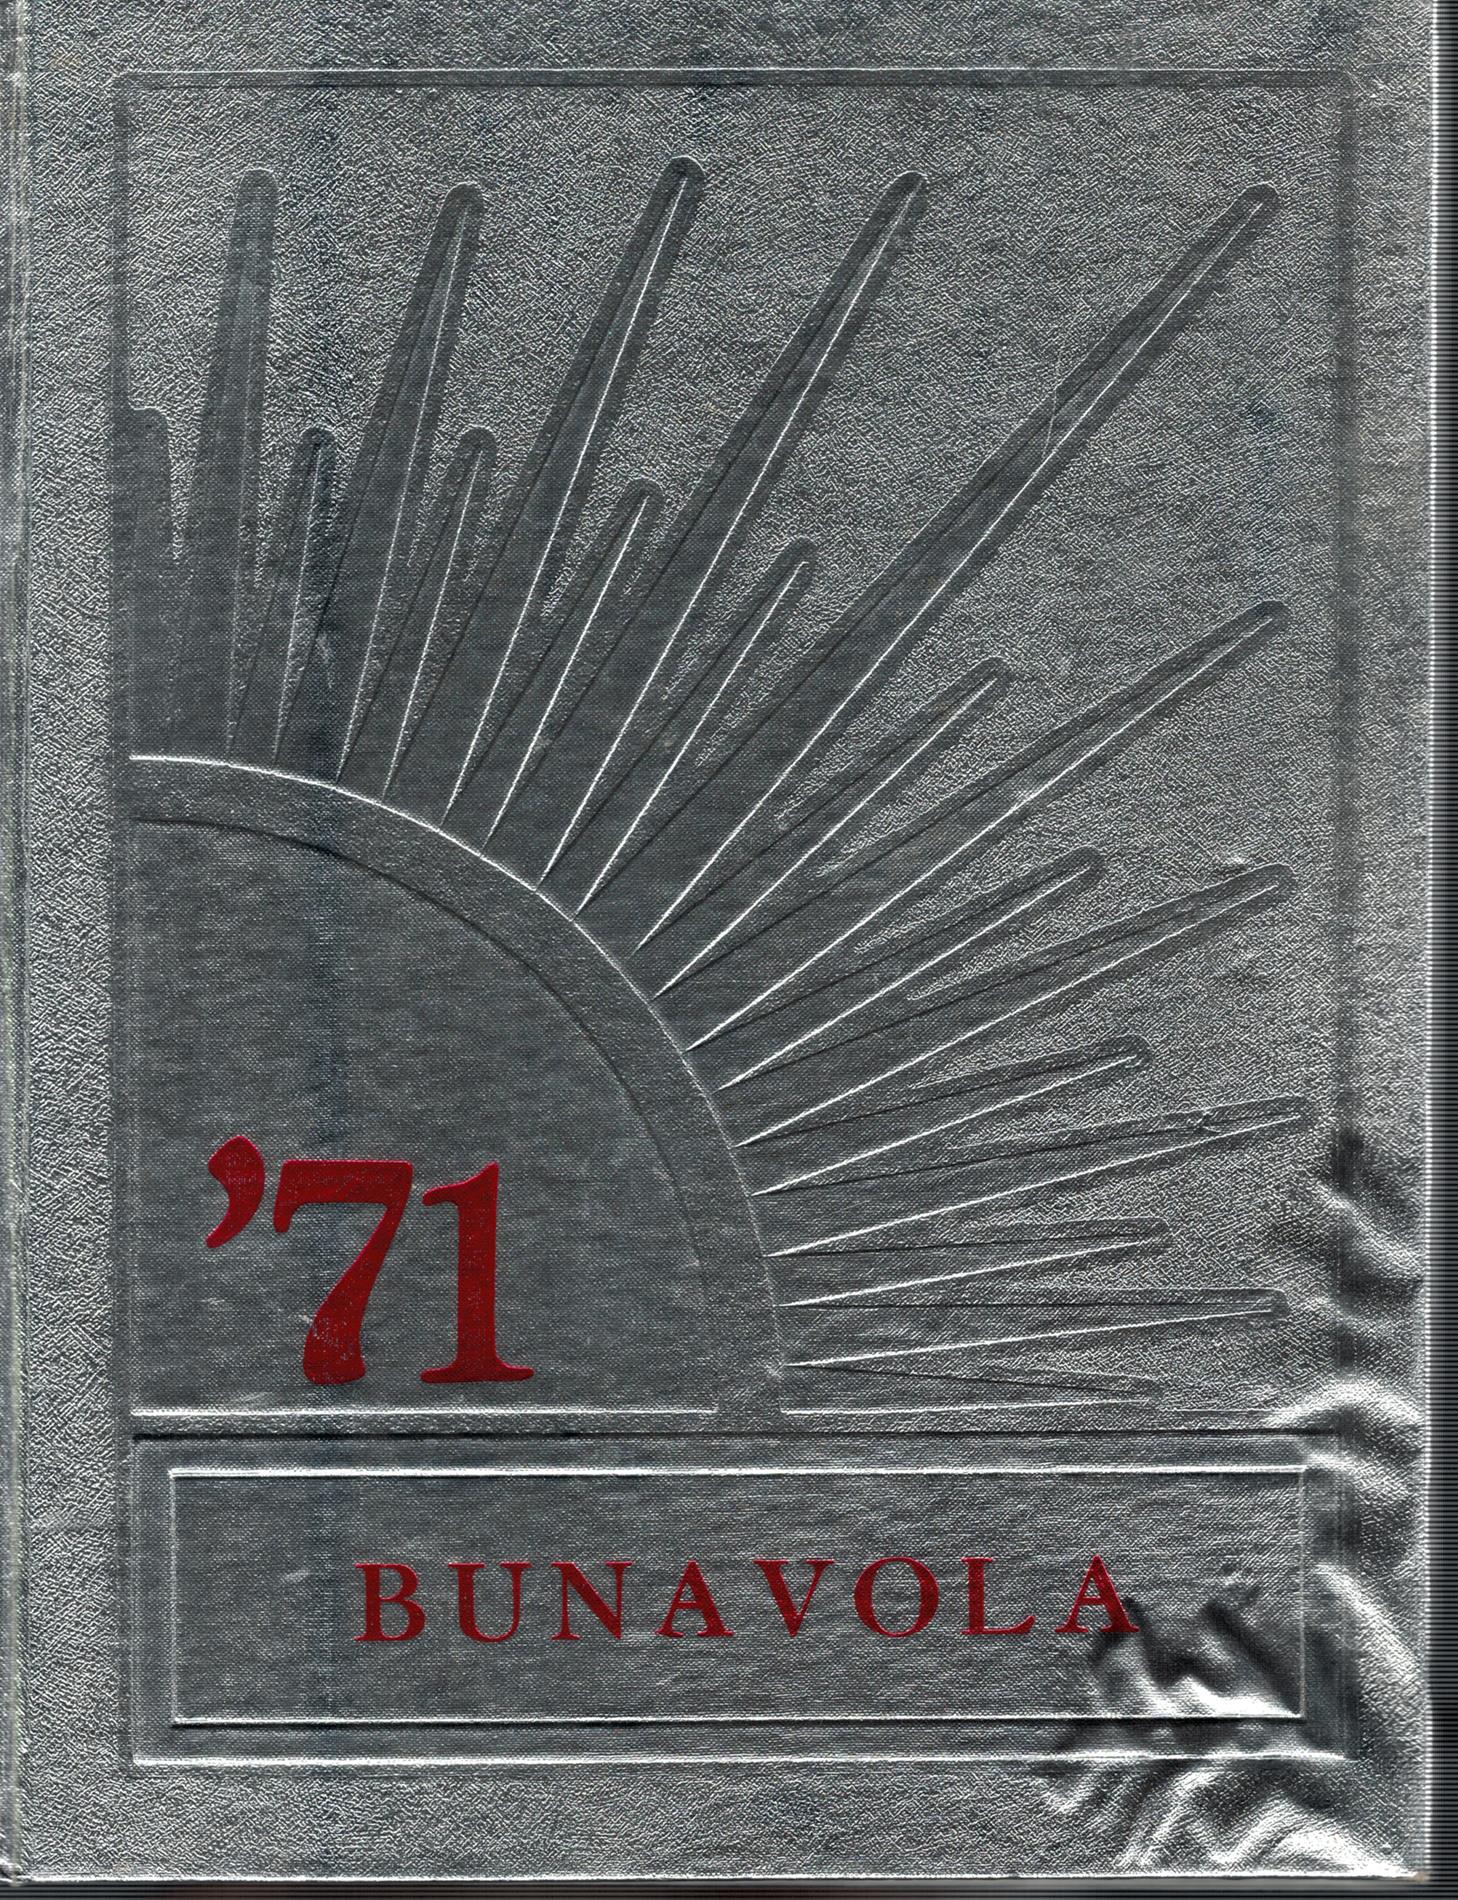 1971 Bunavola